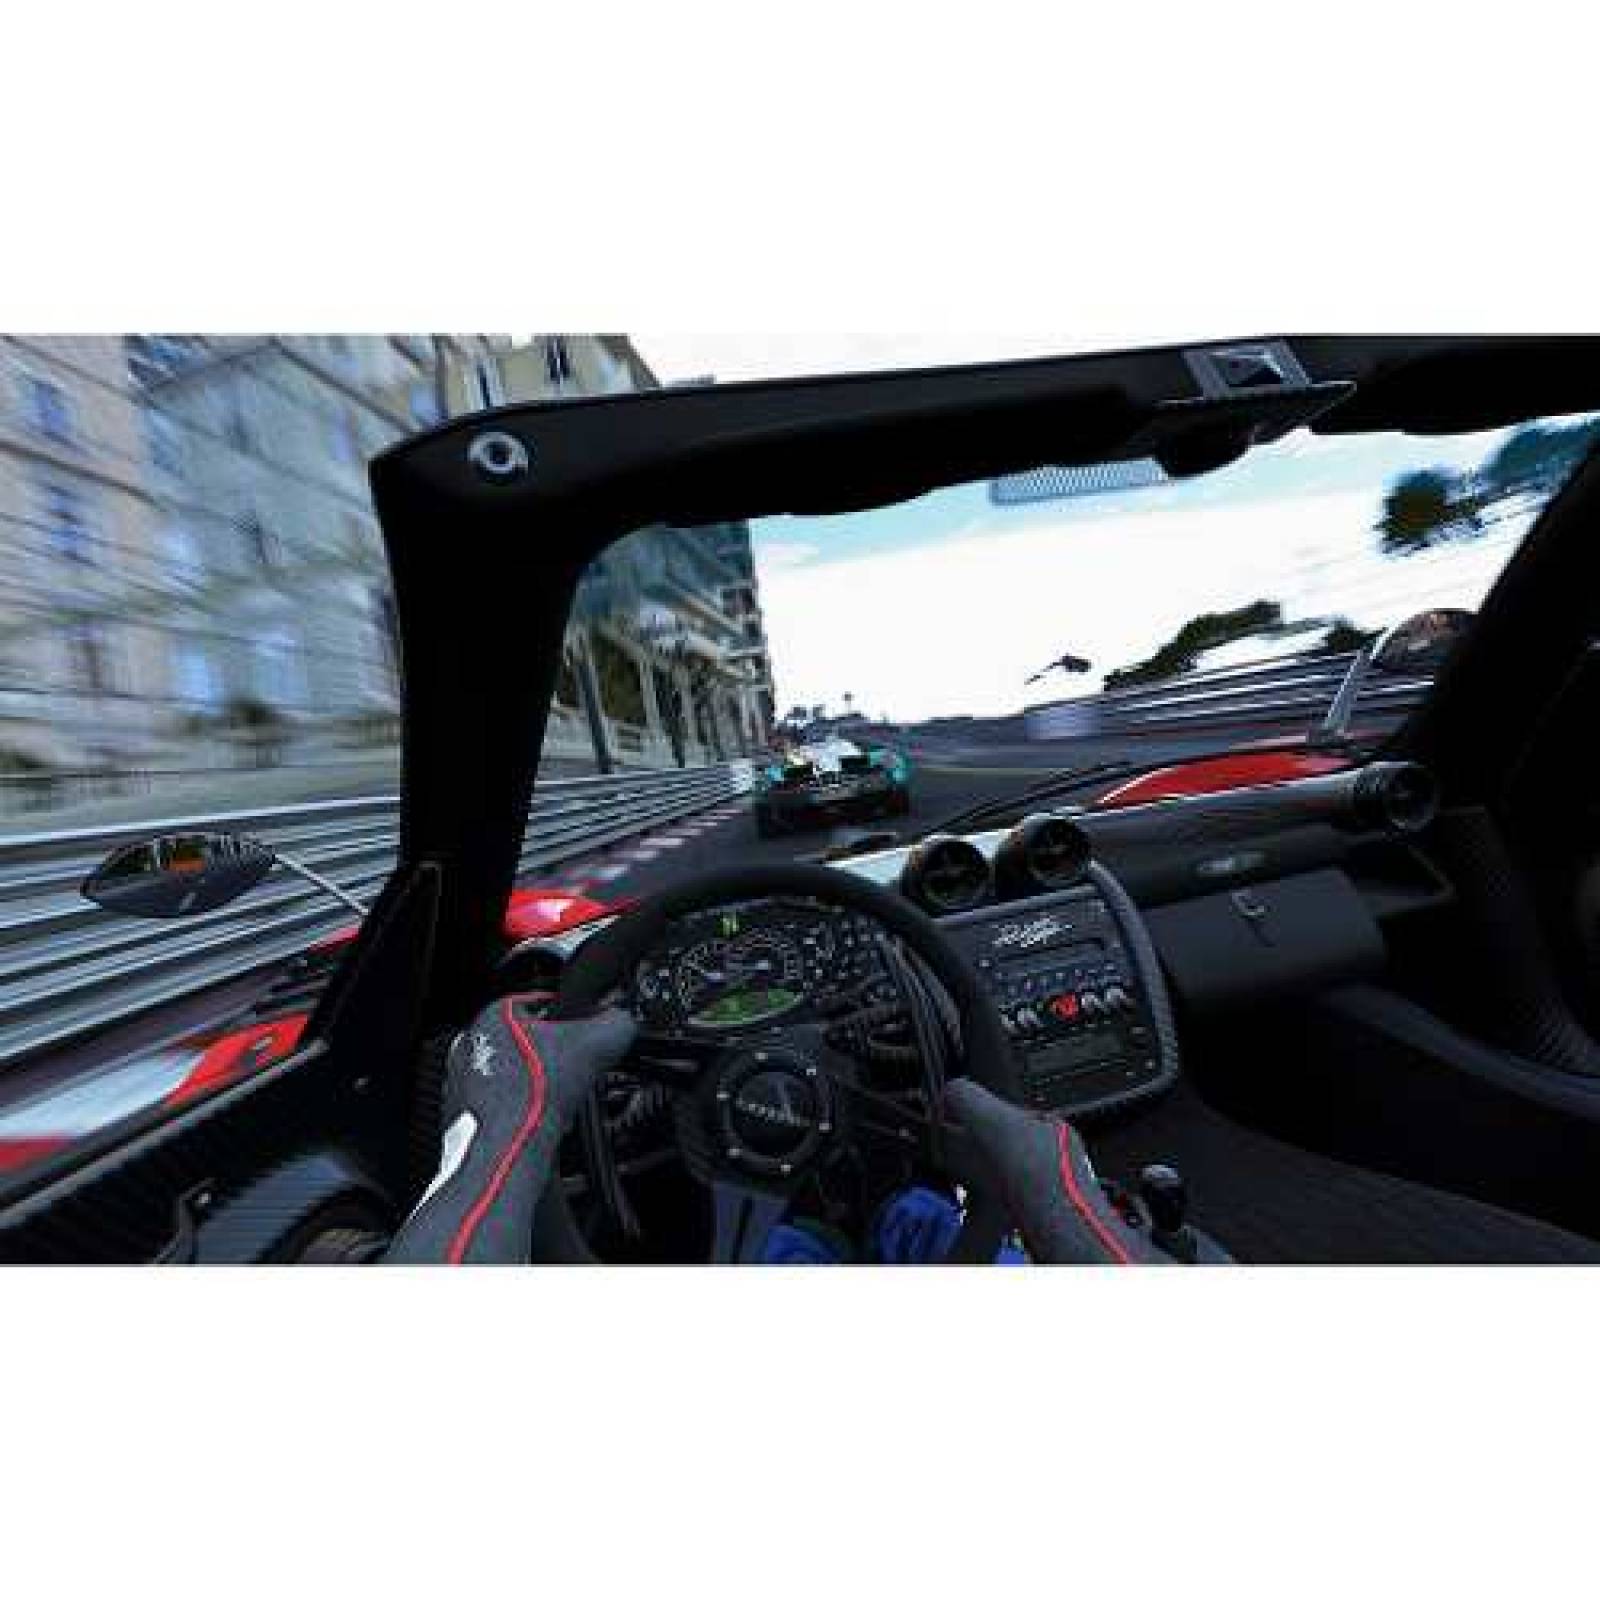 Juego Project cars 2 Day One Xbox One Ibushak Gaming